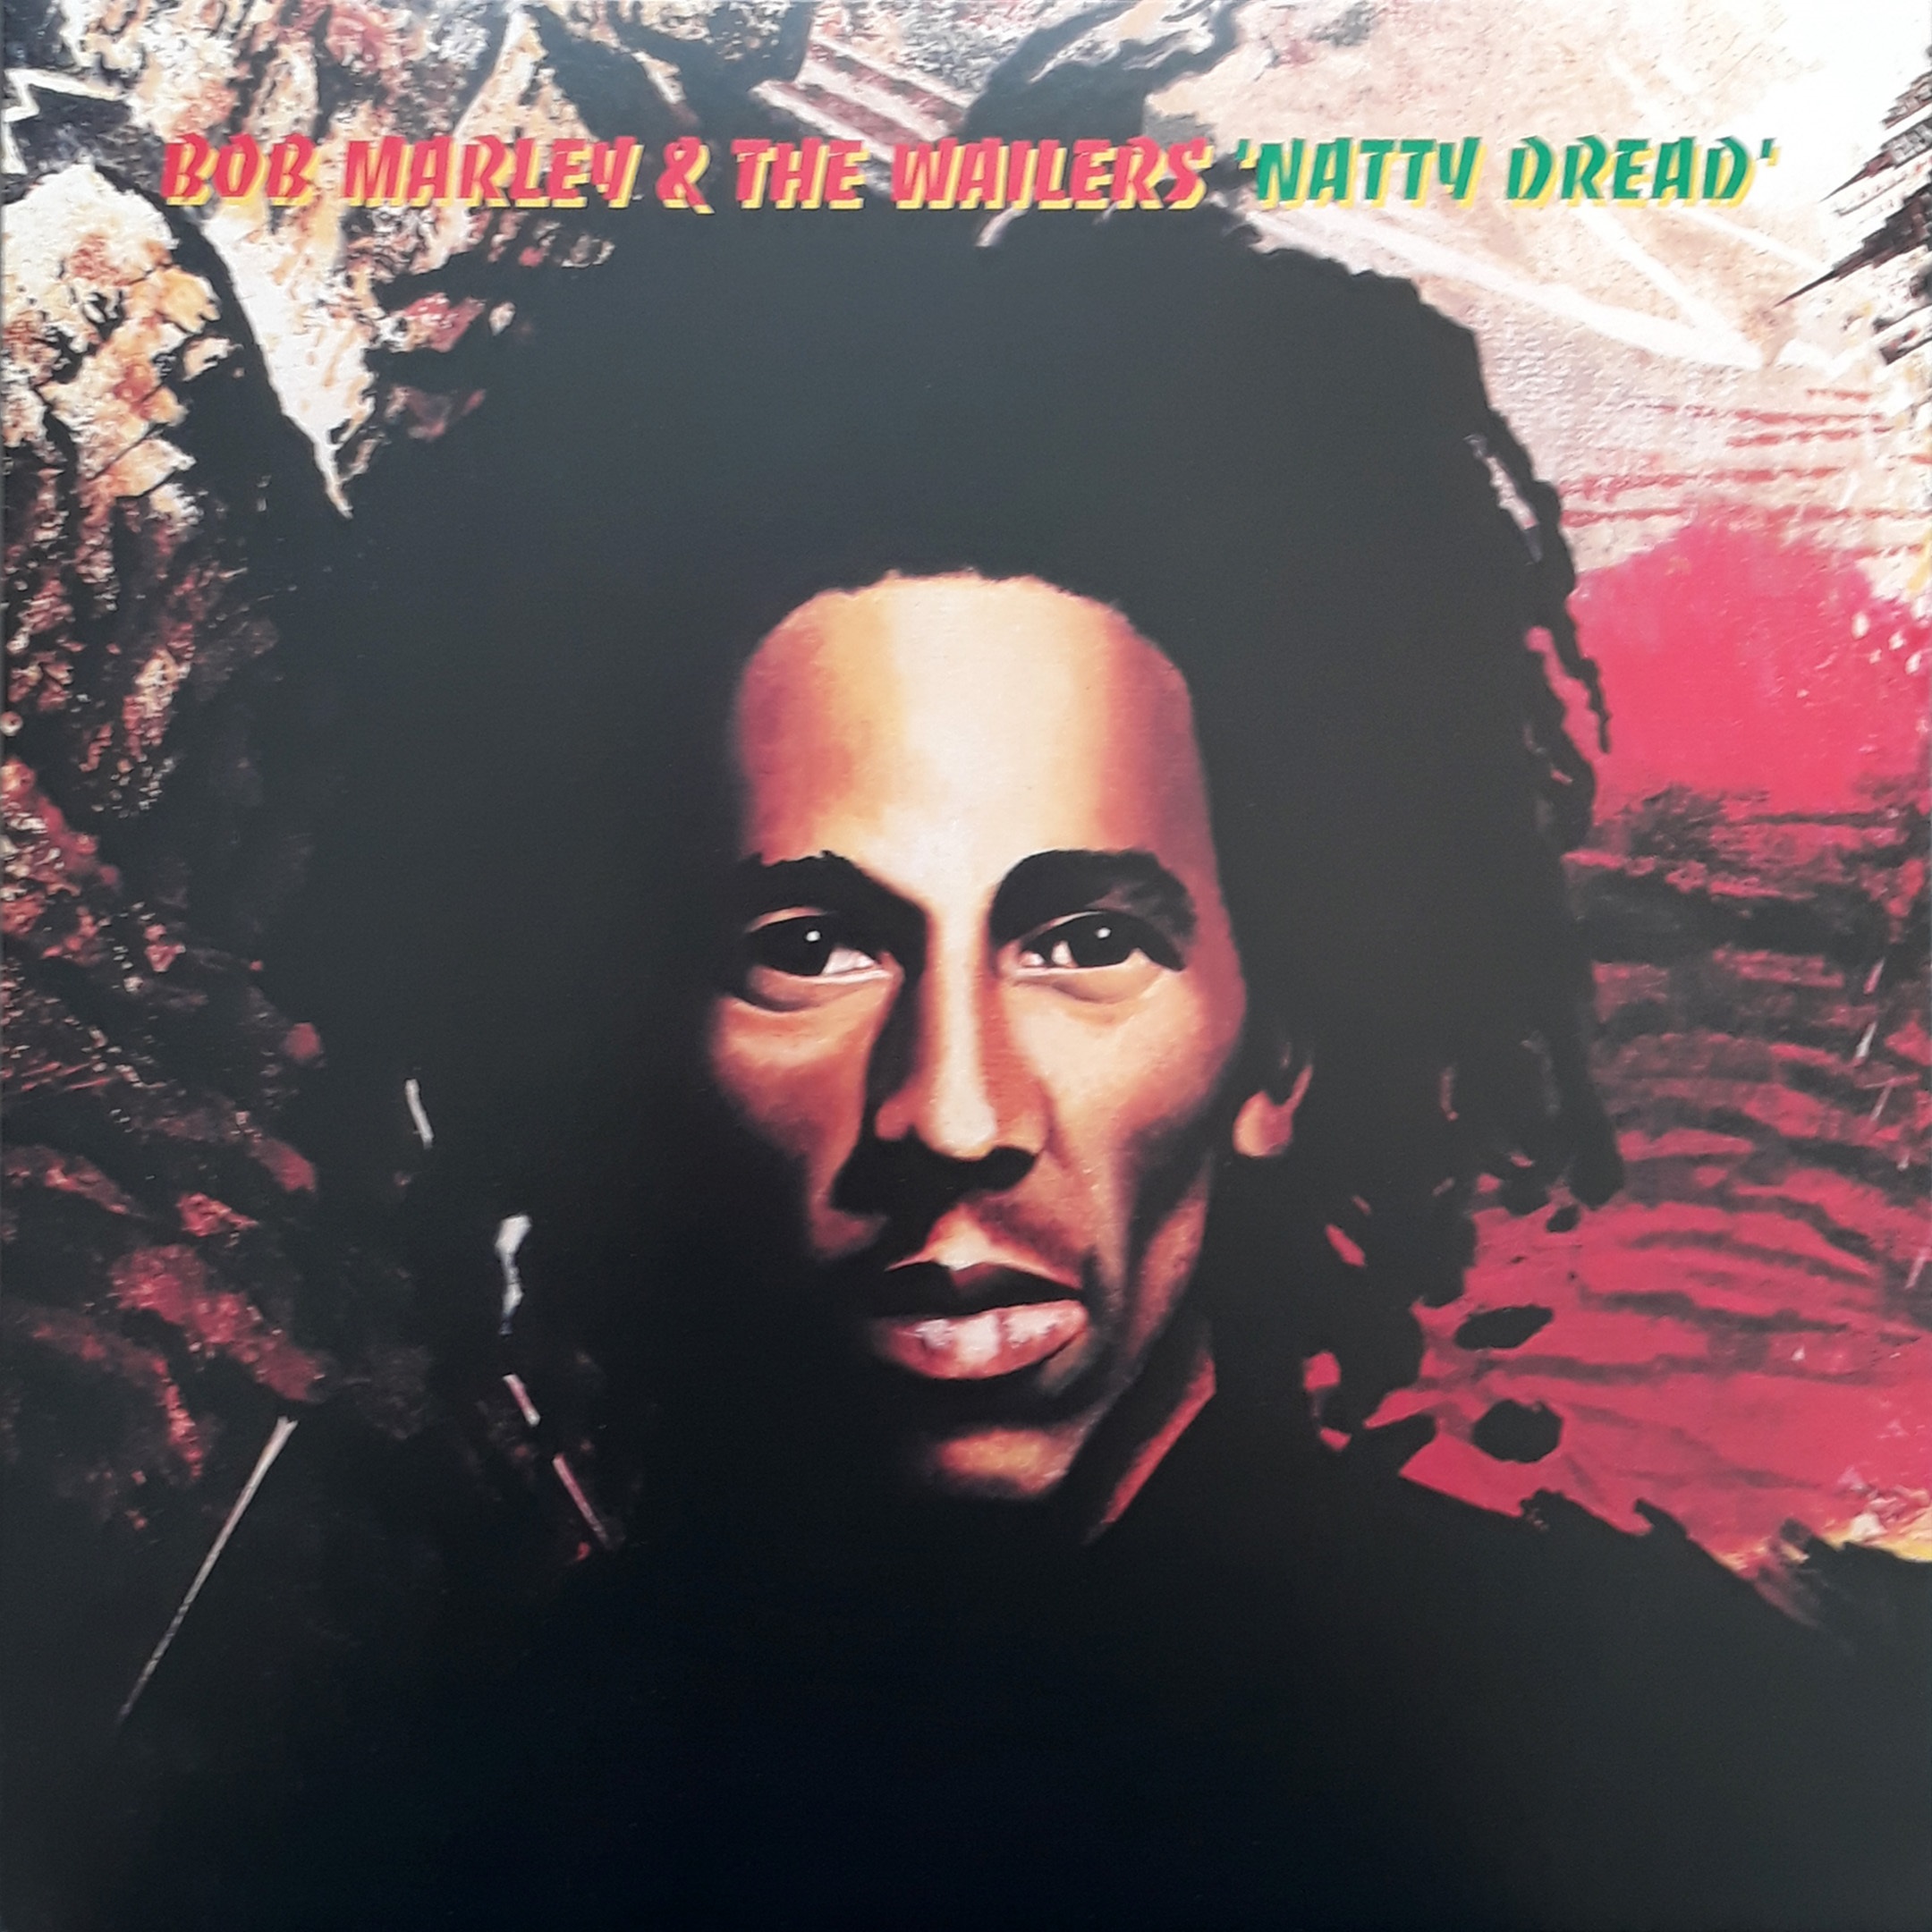 Bob Marley & The Wailers - Natty Dread (Limited Edition Half-Speed Master) (1974/2020) [FLAC 24bit/96kHz]